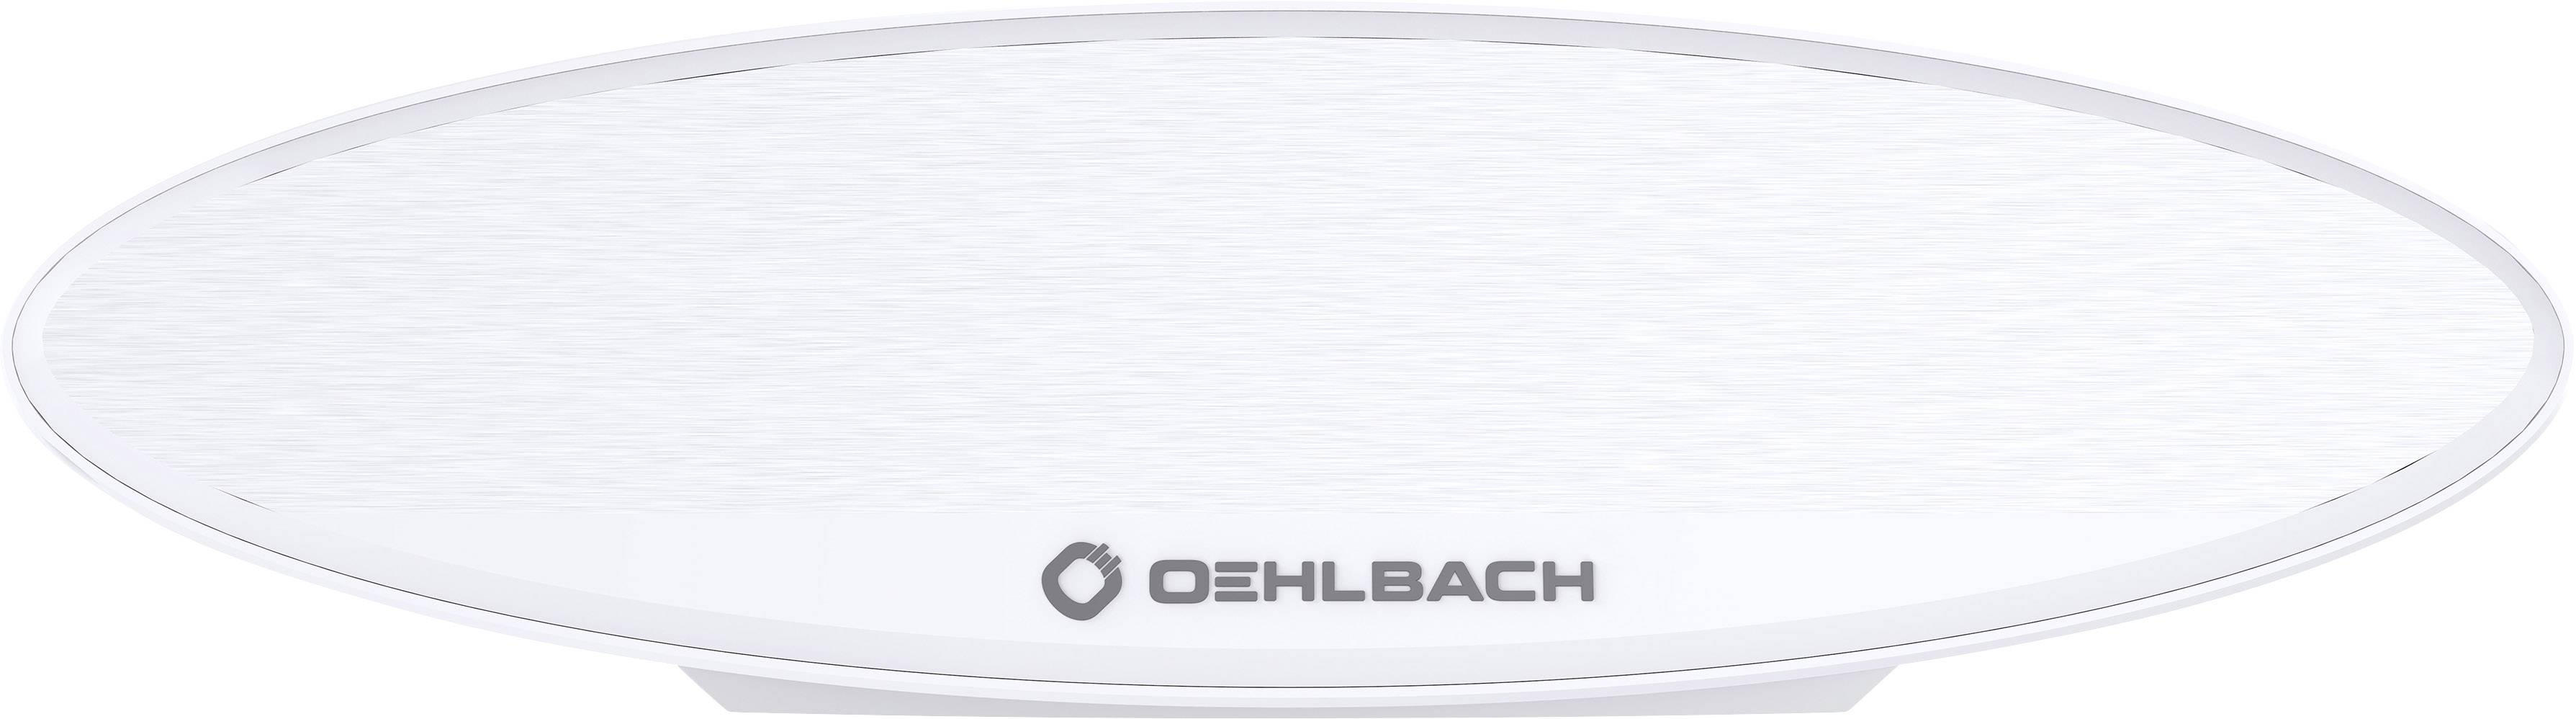 OEHLBACH Scope Oval D1C17230 Aktive DVB-T/T2 Flachantenne Innenbereich Weiß